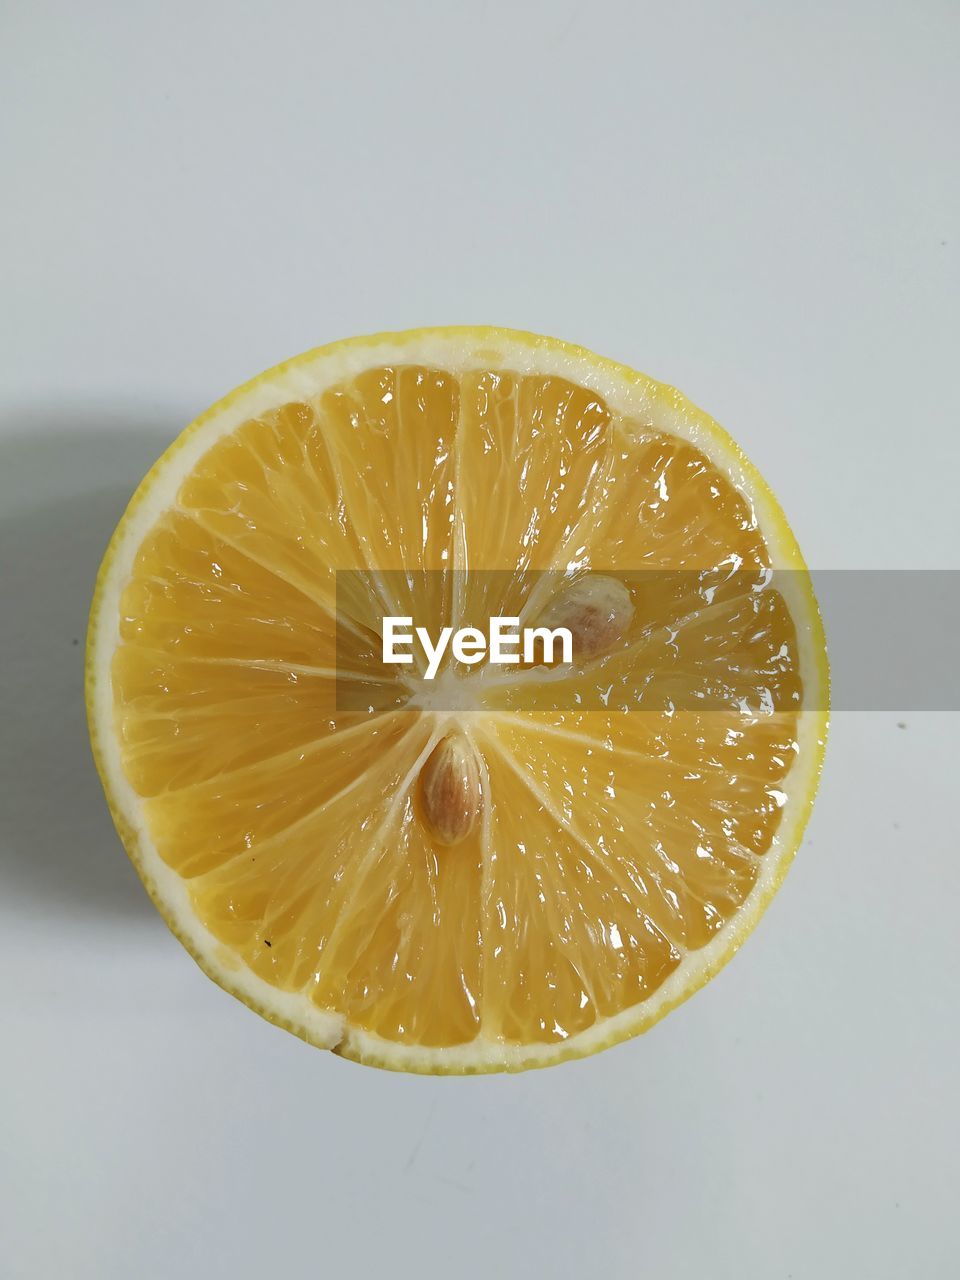 A slice of lemon from picking in the garden